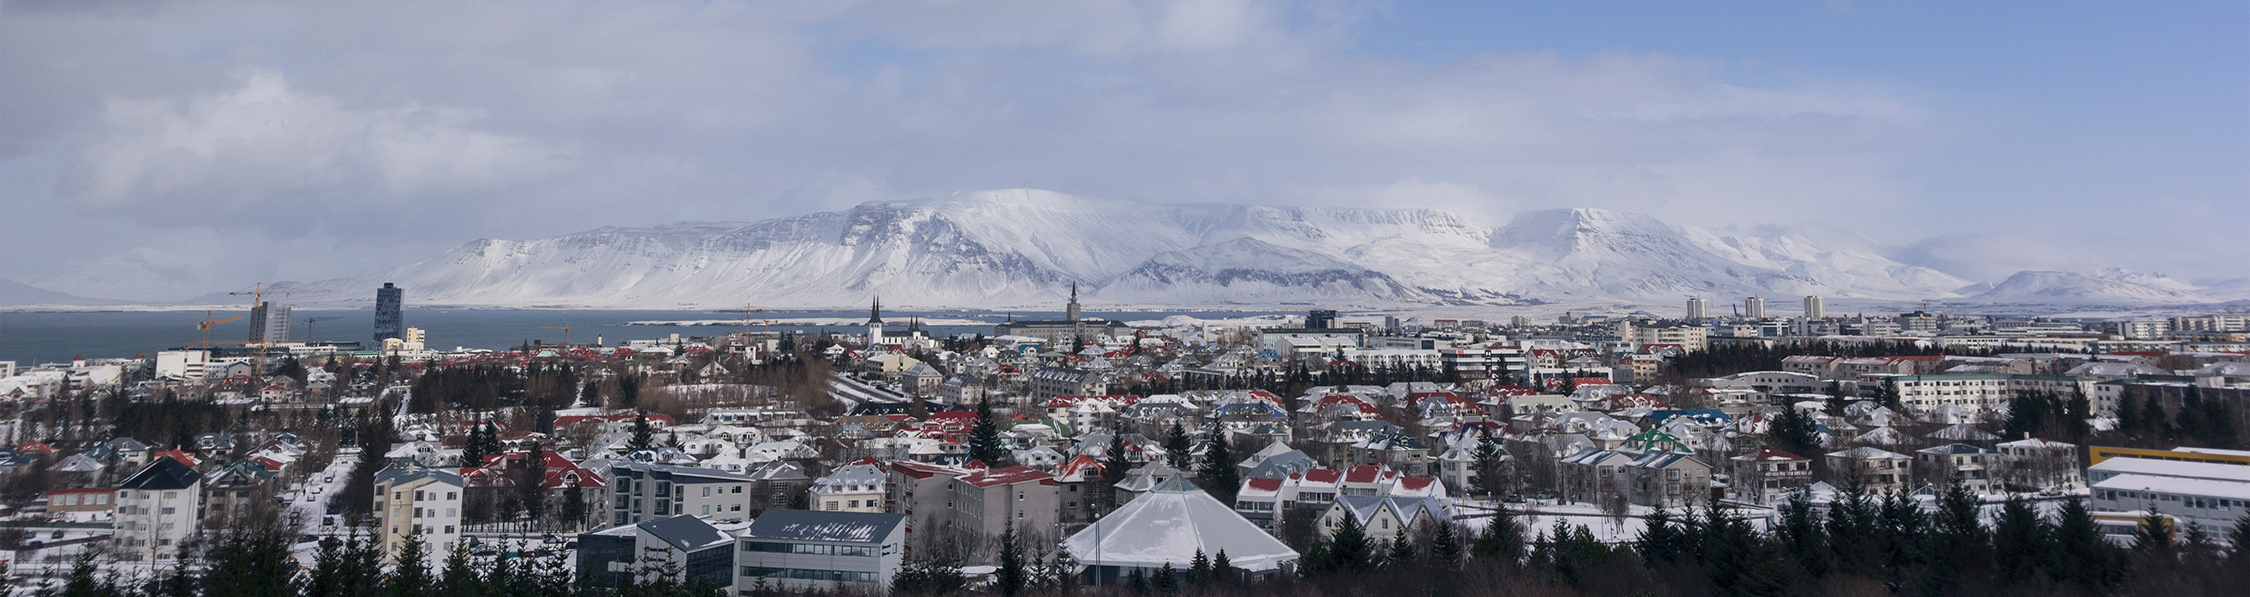 Panorama von Reykjavik